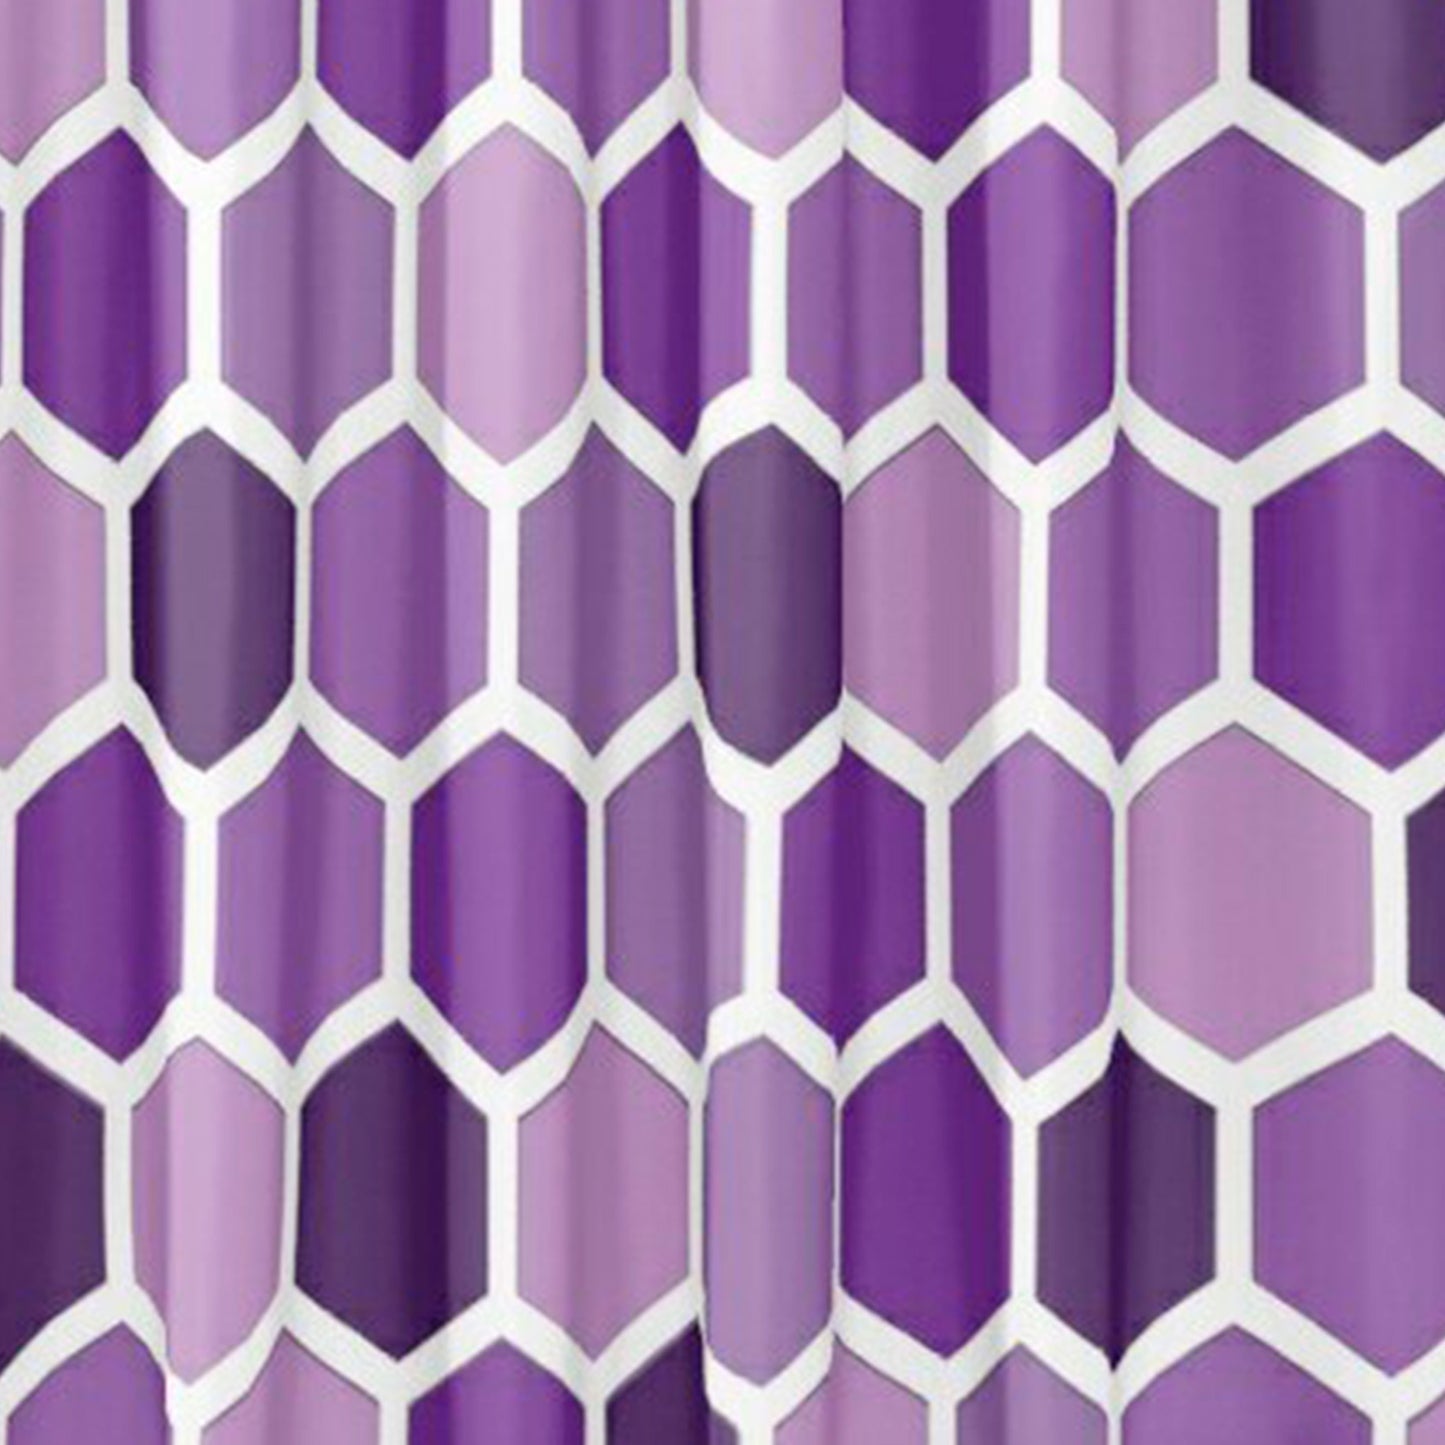 Purple Honeycomb Shower Curtain